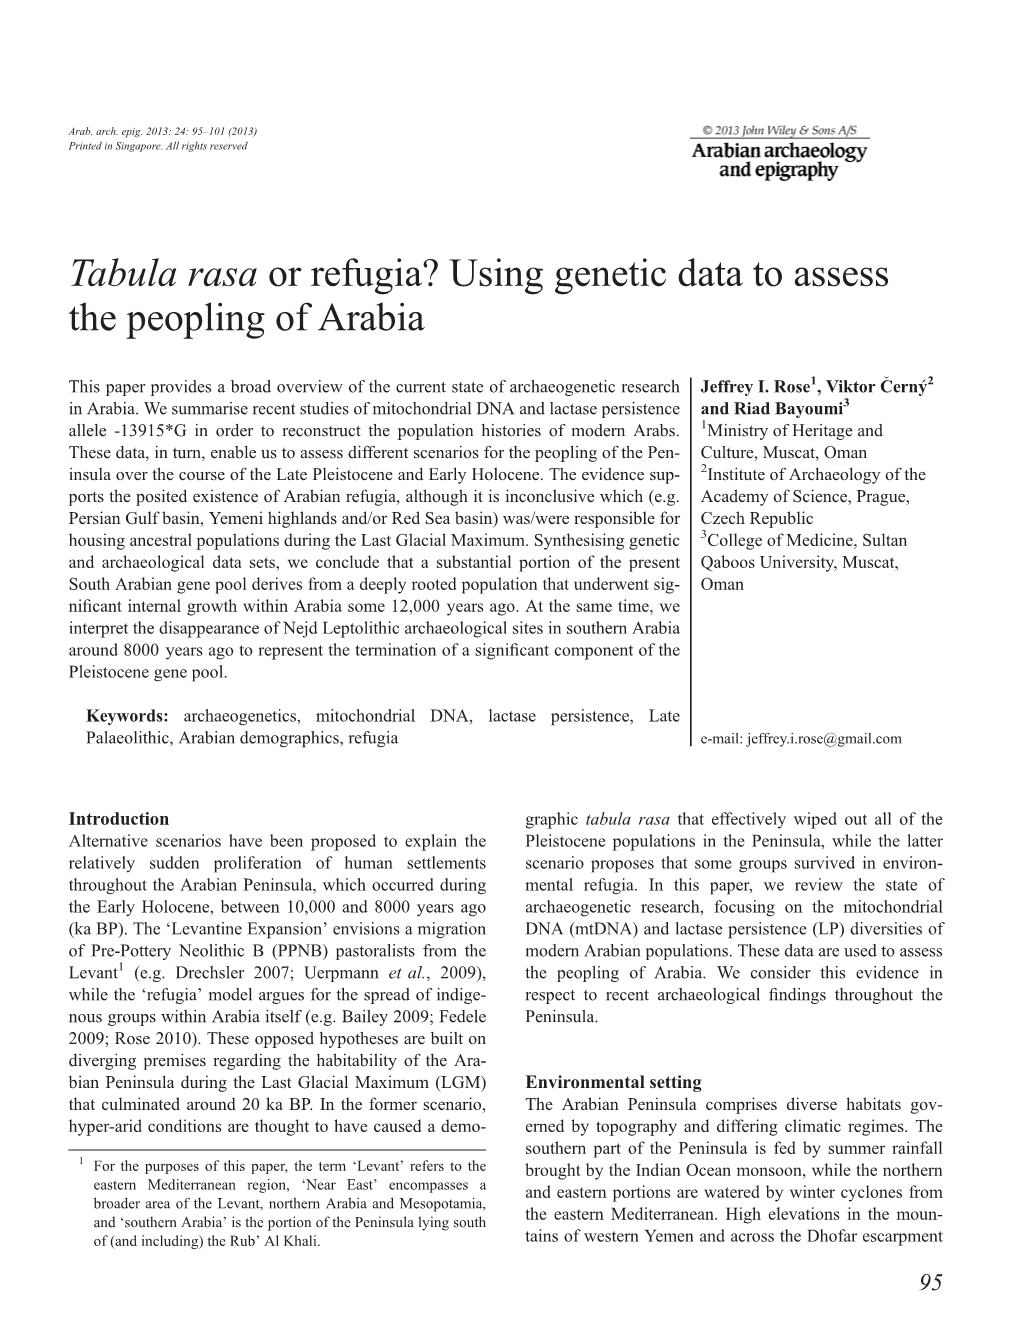 Tabula Rasa Or Refugia? Using Genetic Data to Assess the Peopling of Arabia